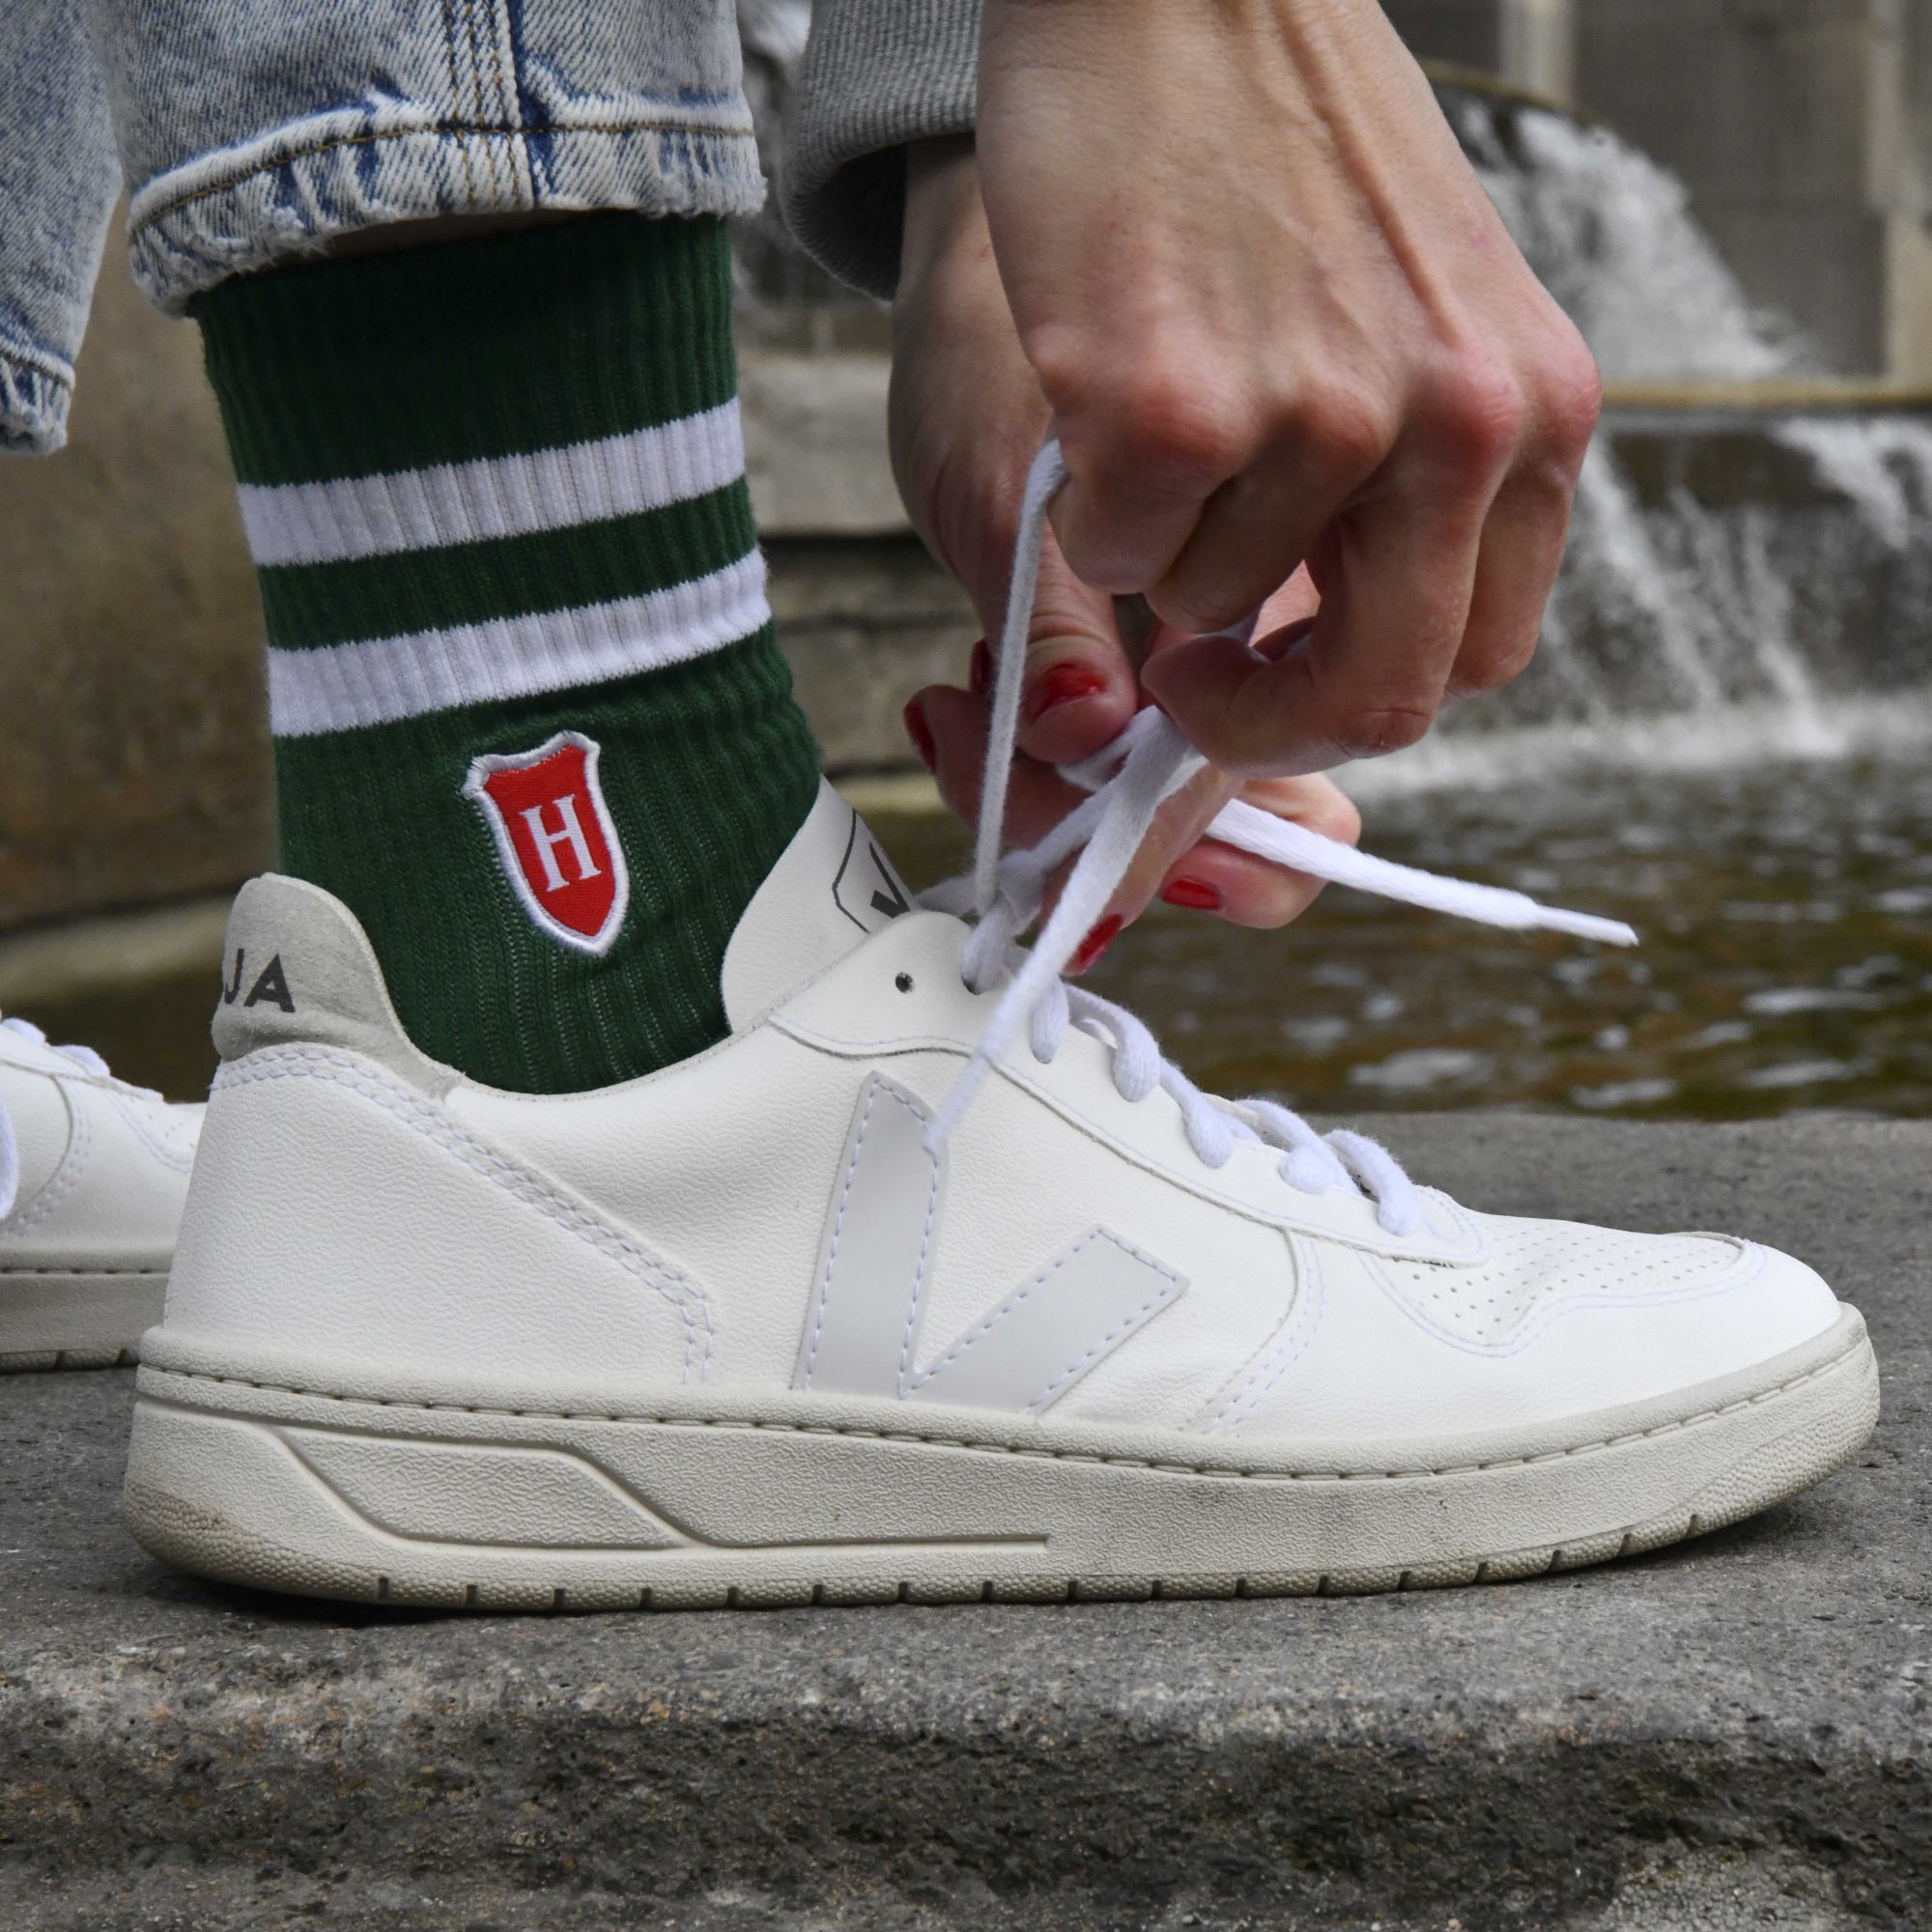 Holsten - sports socks 2 pieces - green/white